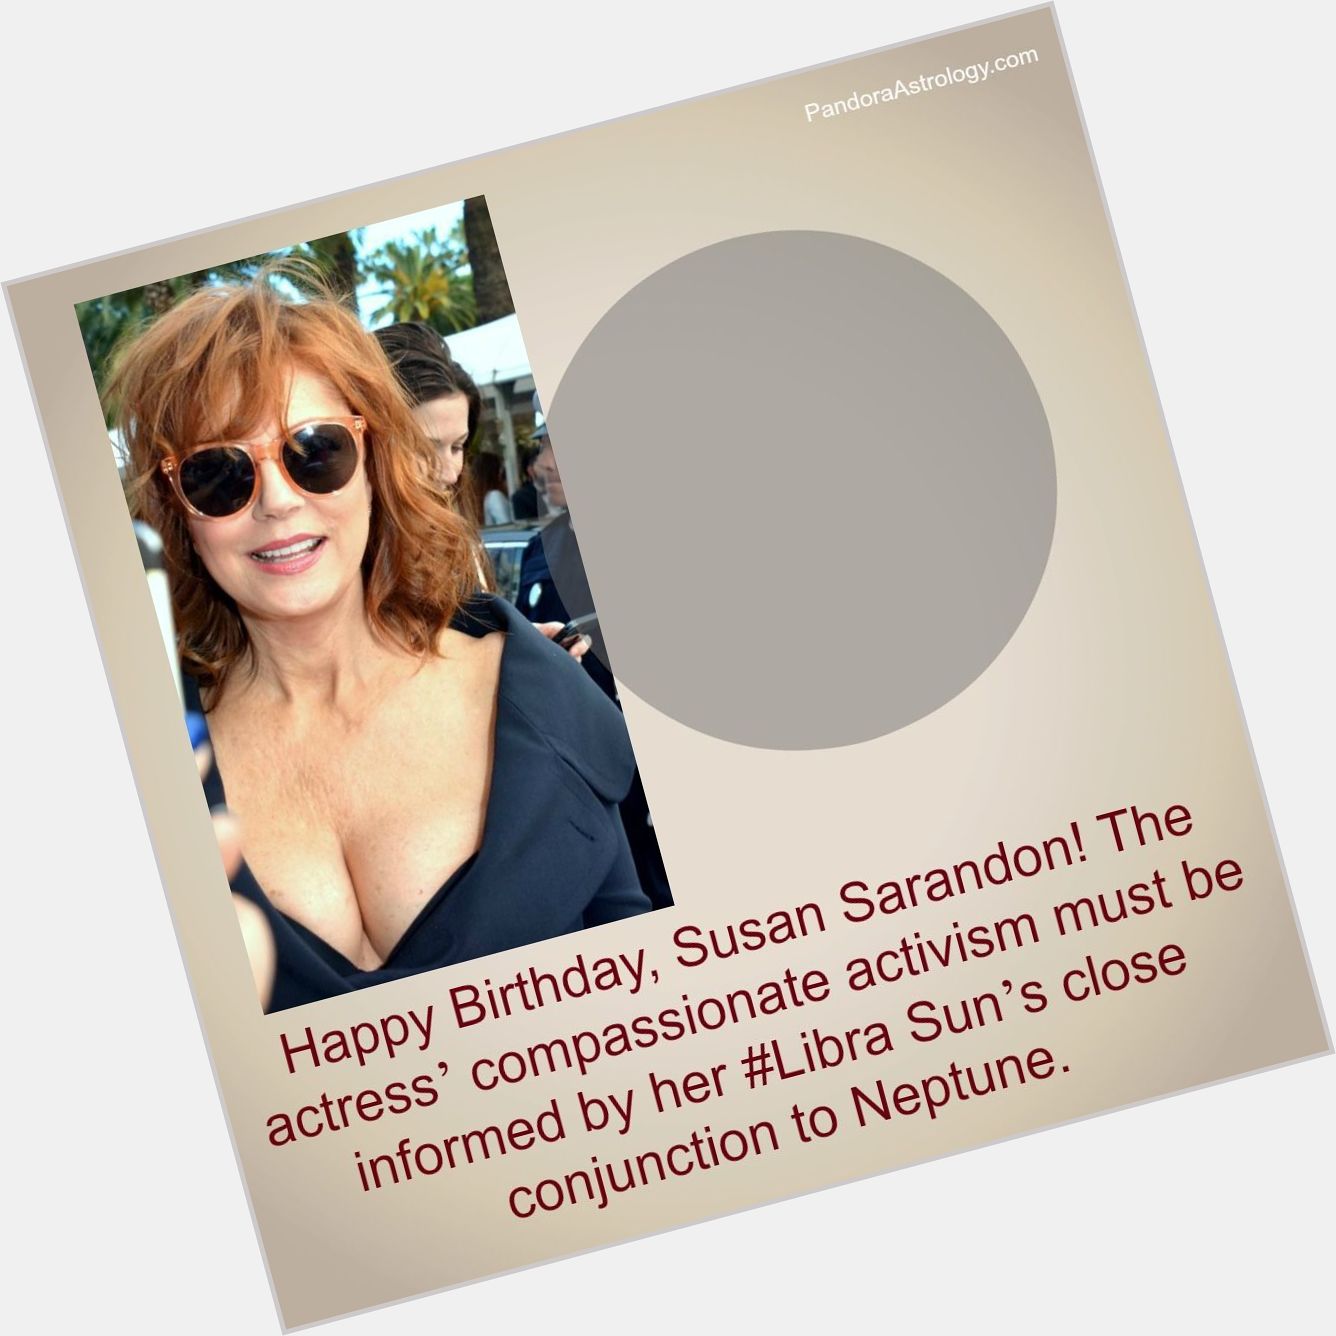 Happy Birthday, Susan Sarandon!   